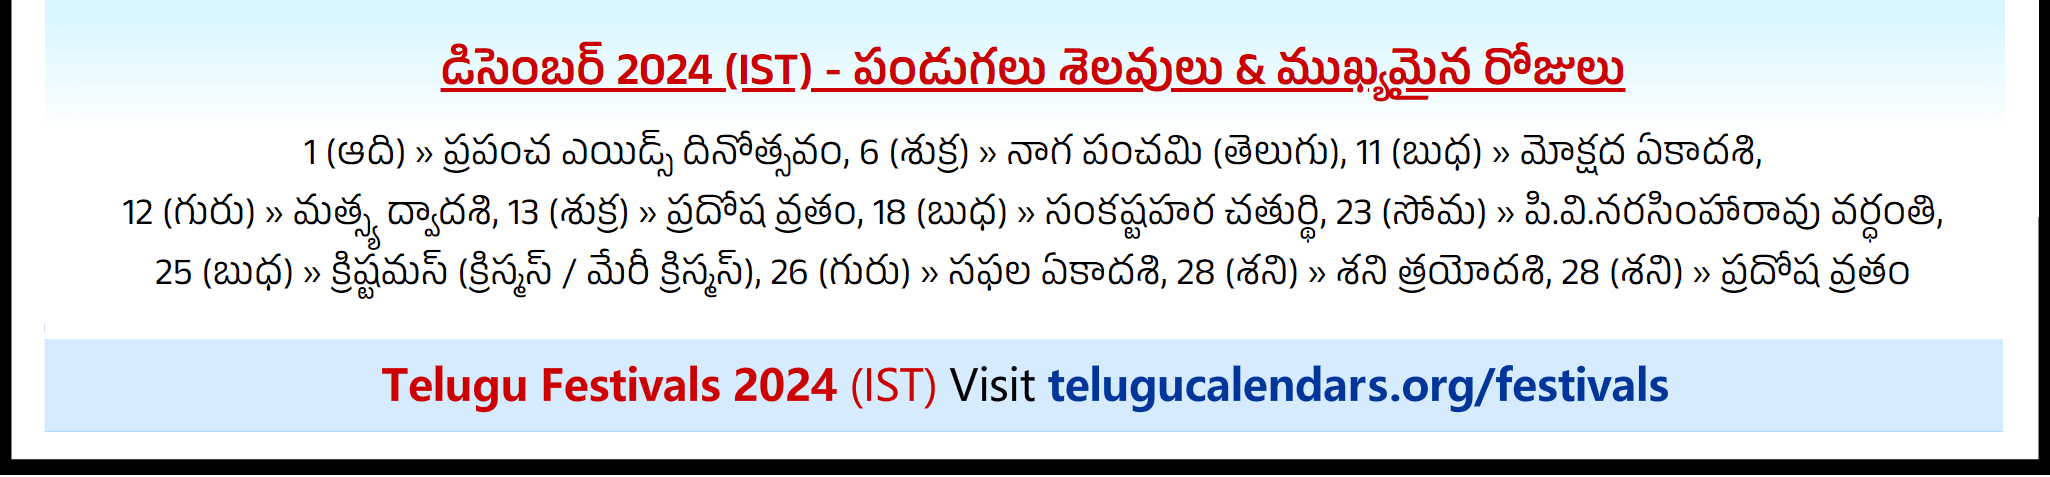 Telugu Festivals 2024 December Los Angeles